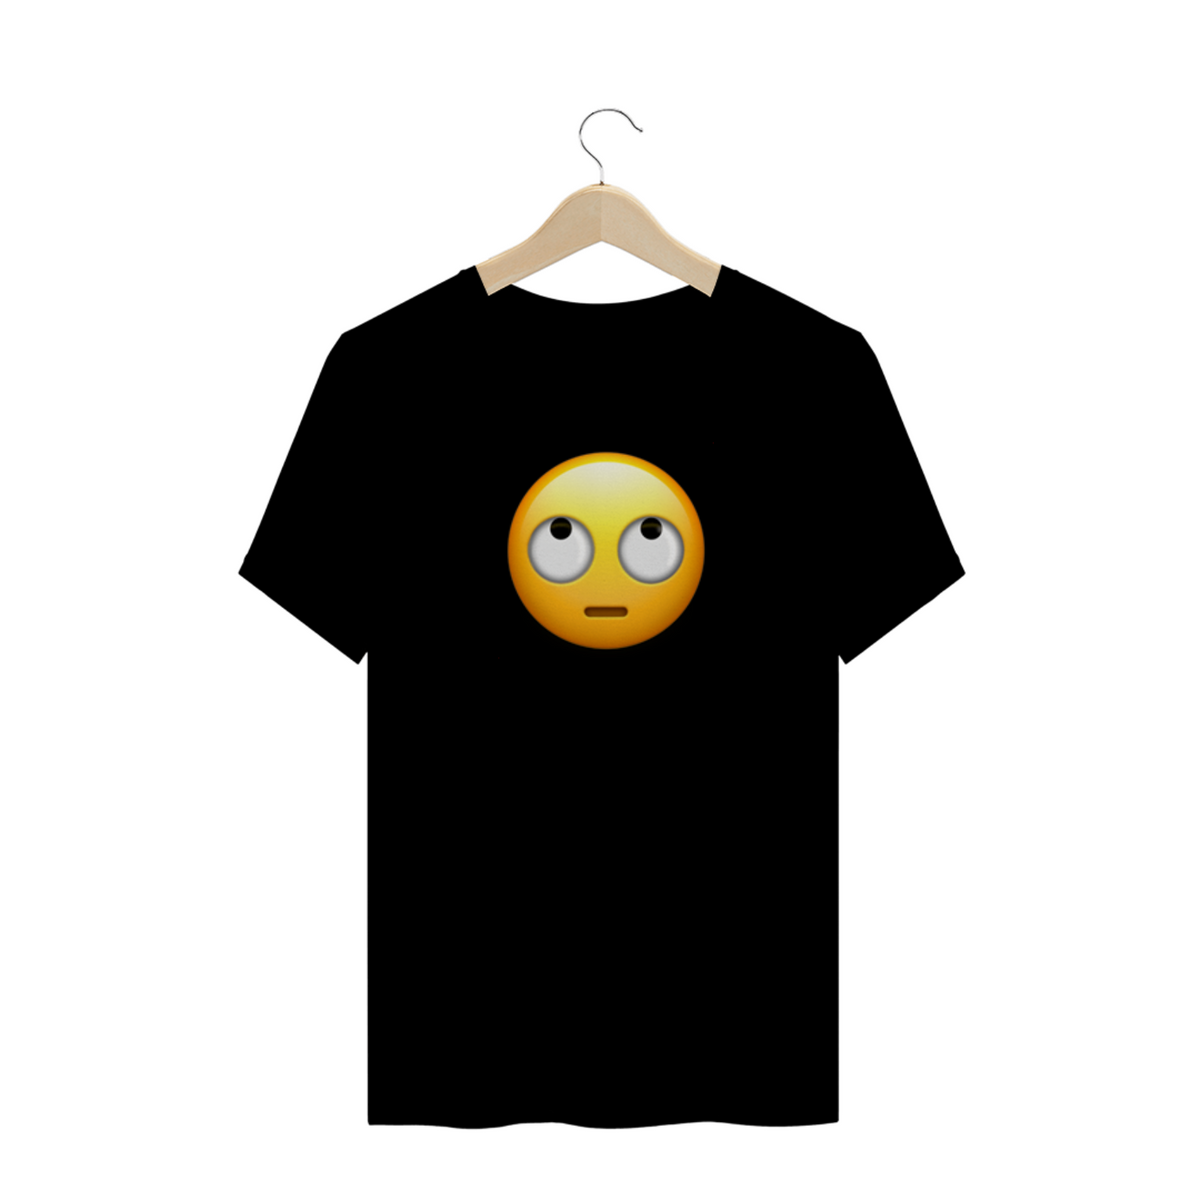 Nome do produto: Emojis - Camisa Emoji